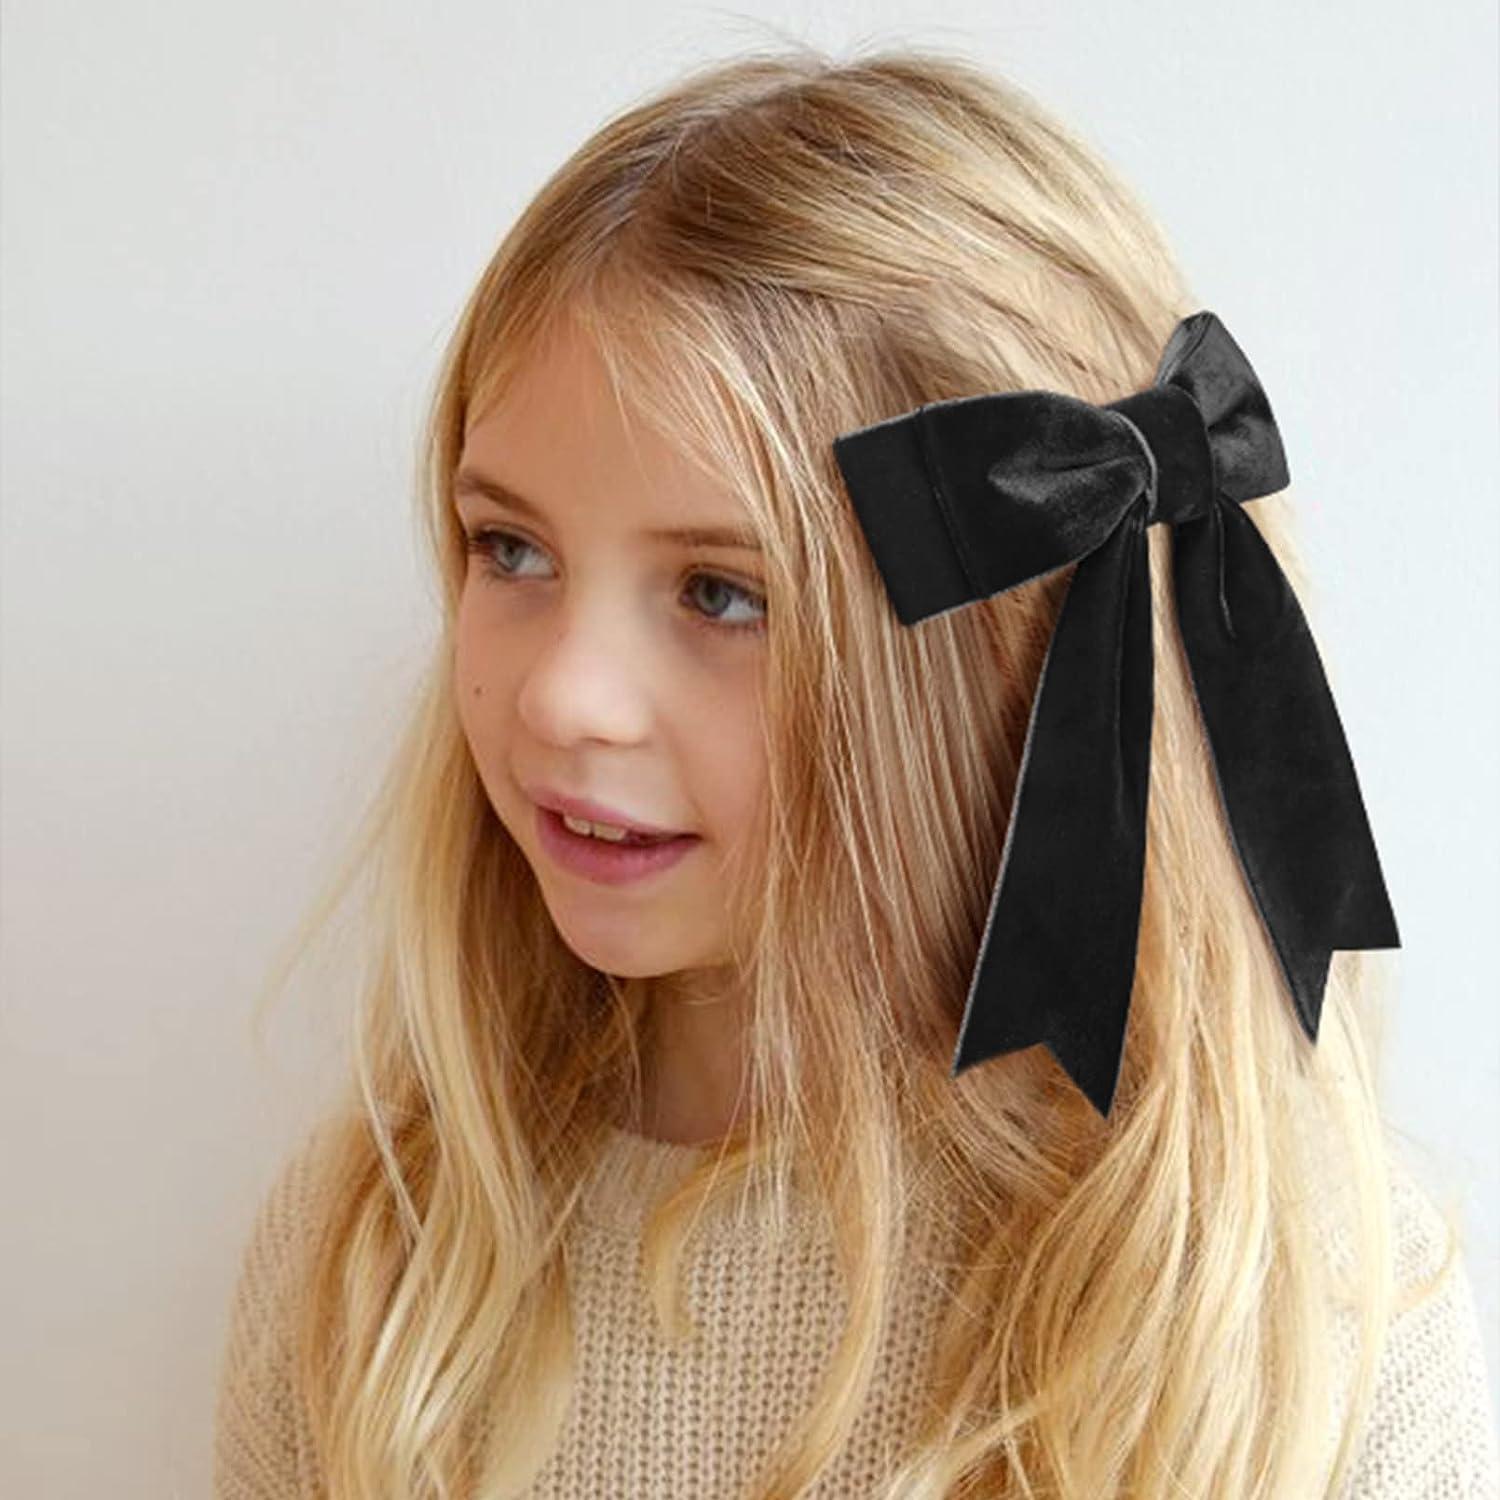 2PCS Black Velvet Bows Girls Hair Clip Ribbon Accessories for Baby